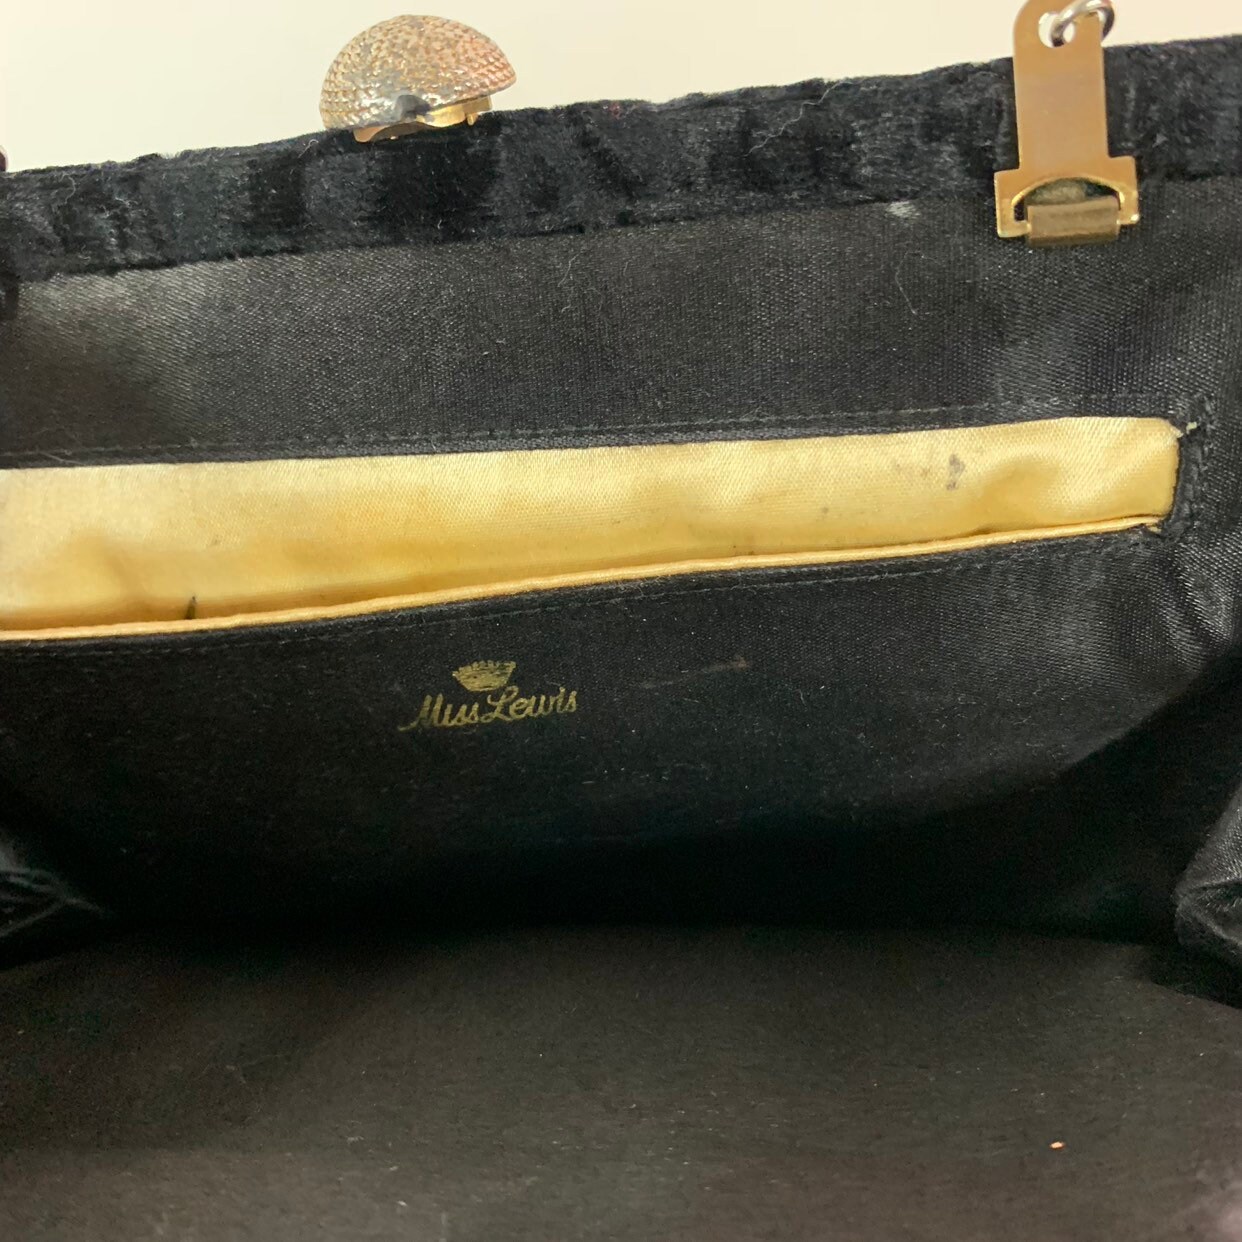 Miss Lewis, Bags, Vintage Miss Lewis Patent Leather Shoulder Bag